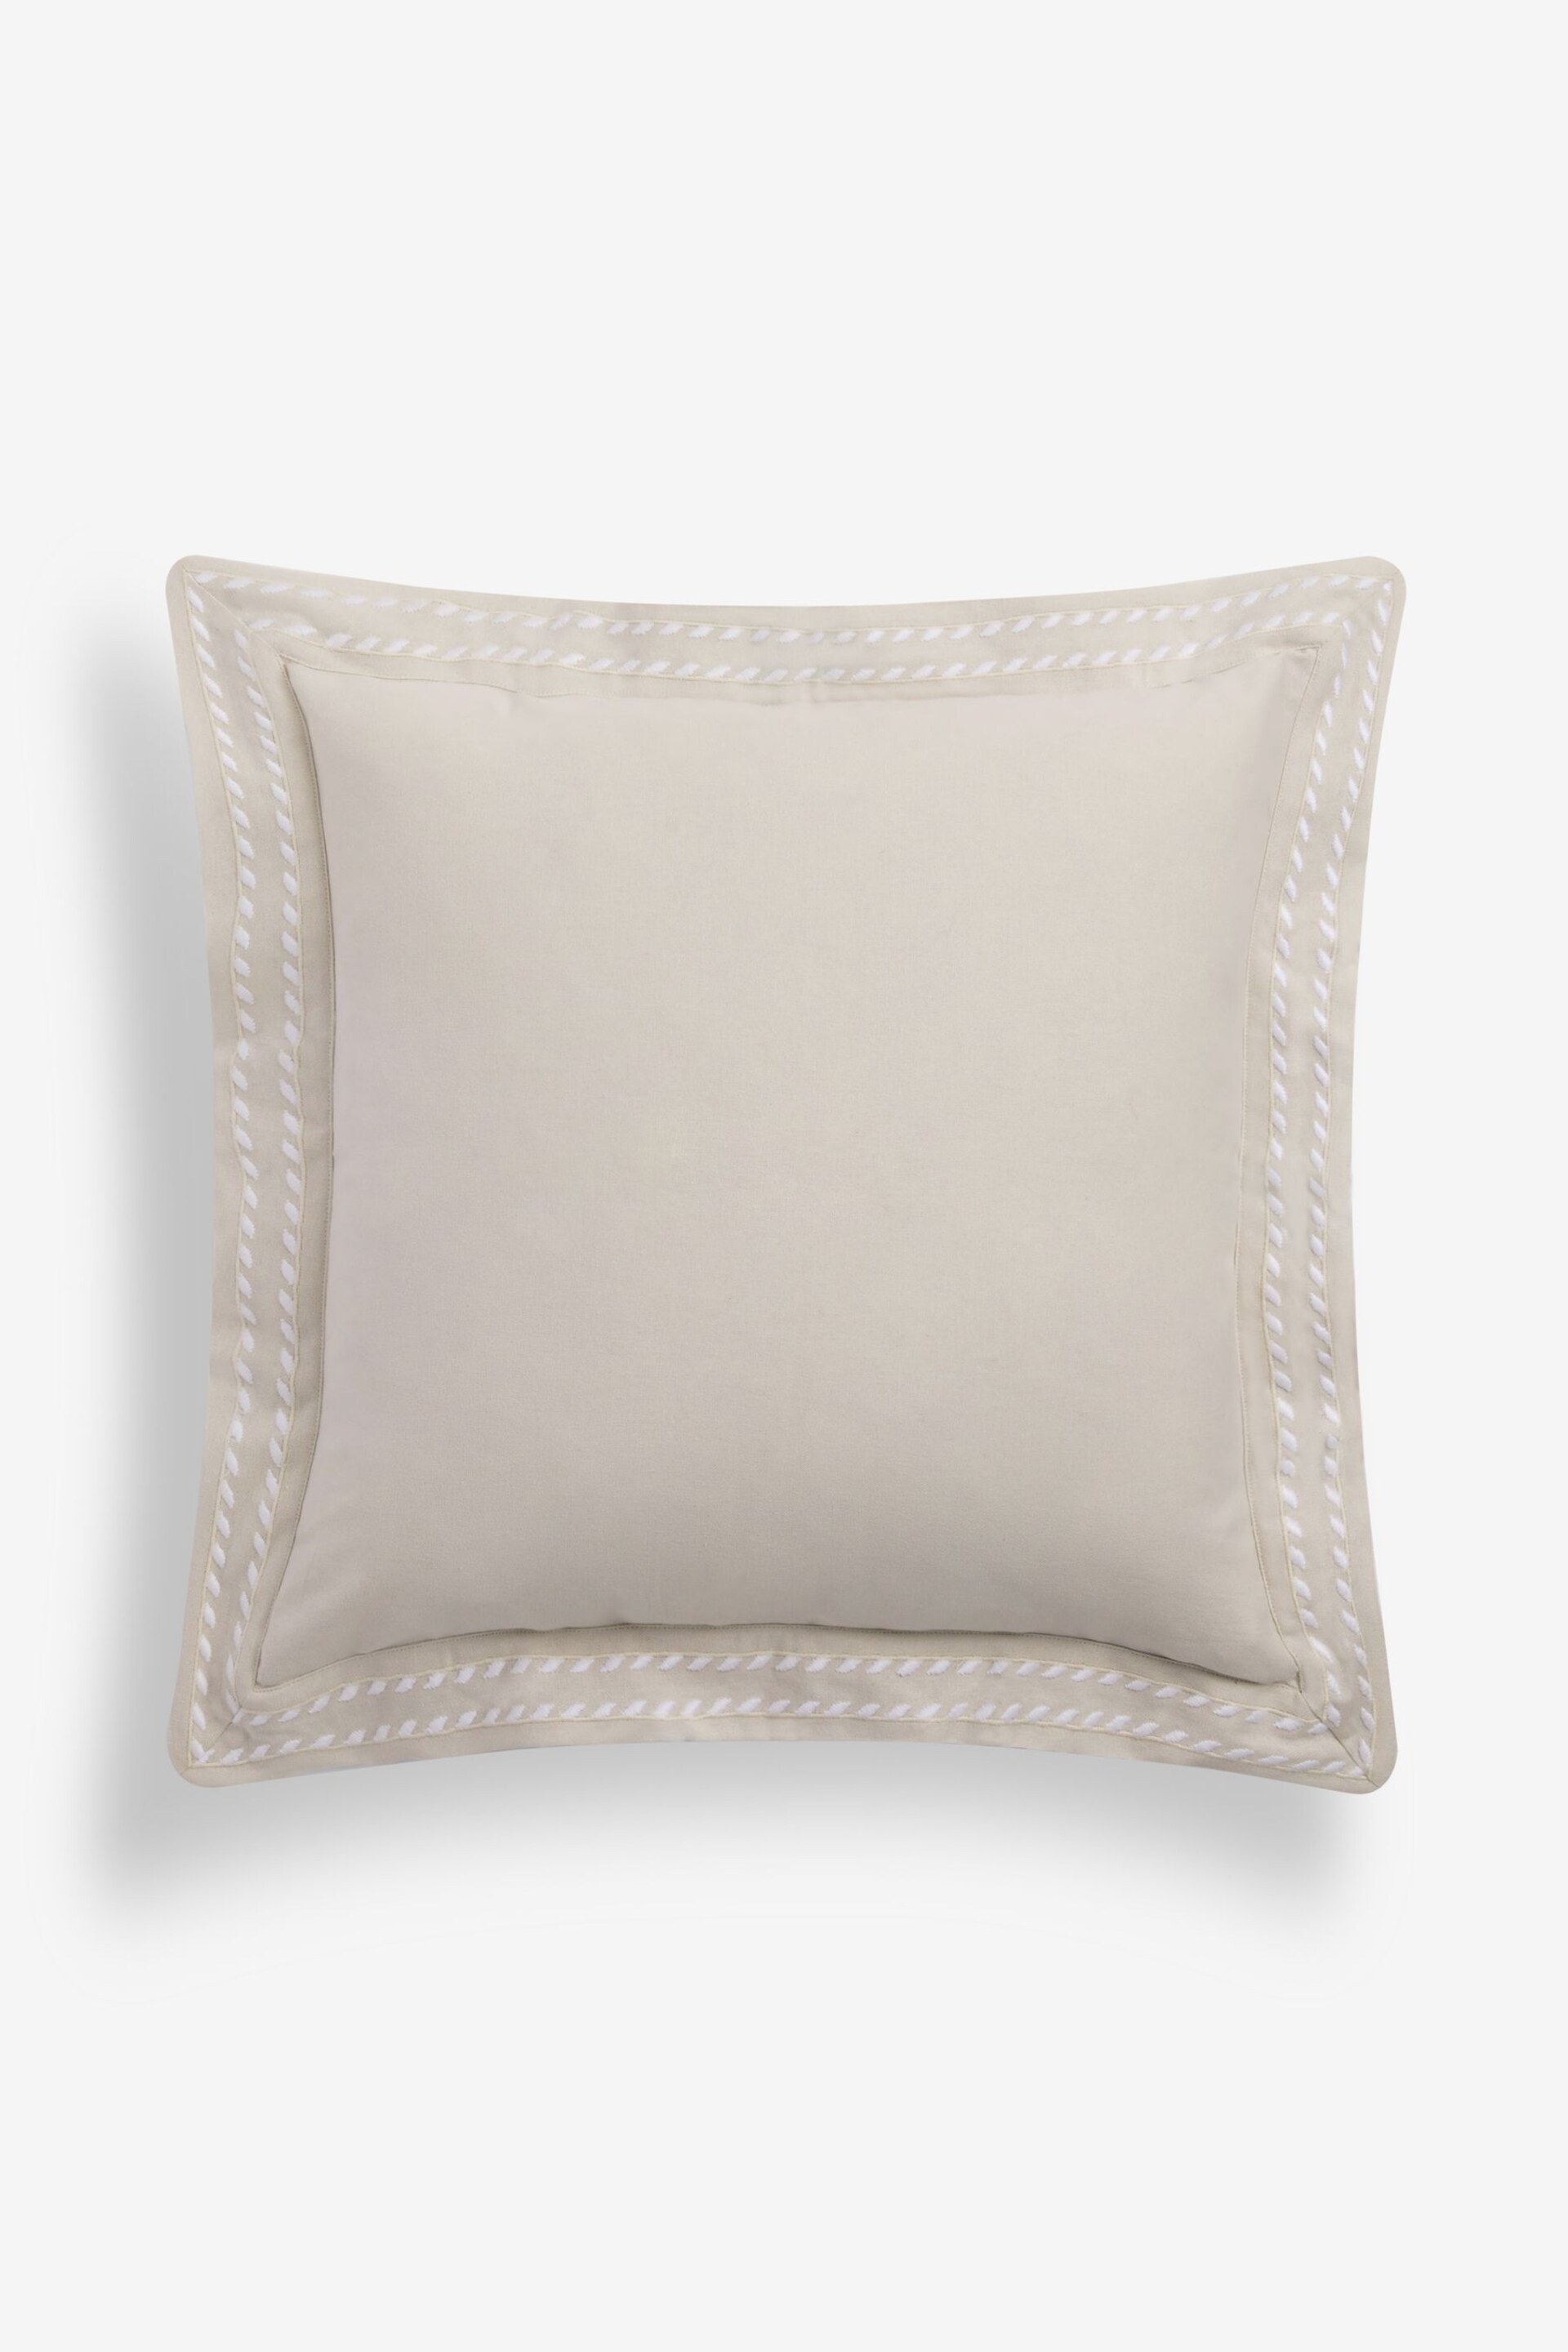 Natural 50 x 50cm Lulworth Stitched Flange Cushion - Image 3 of 4